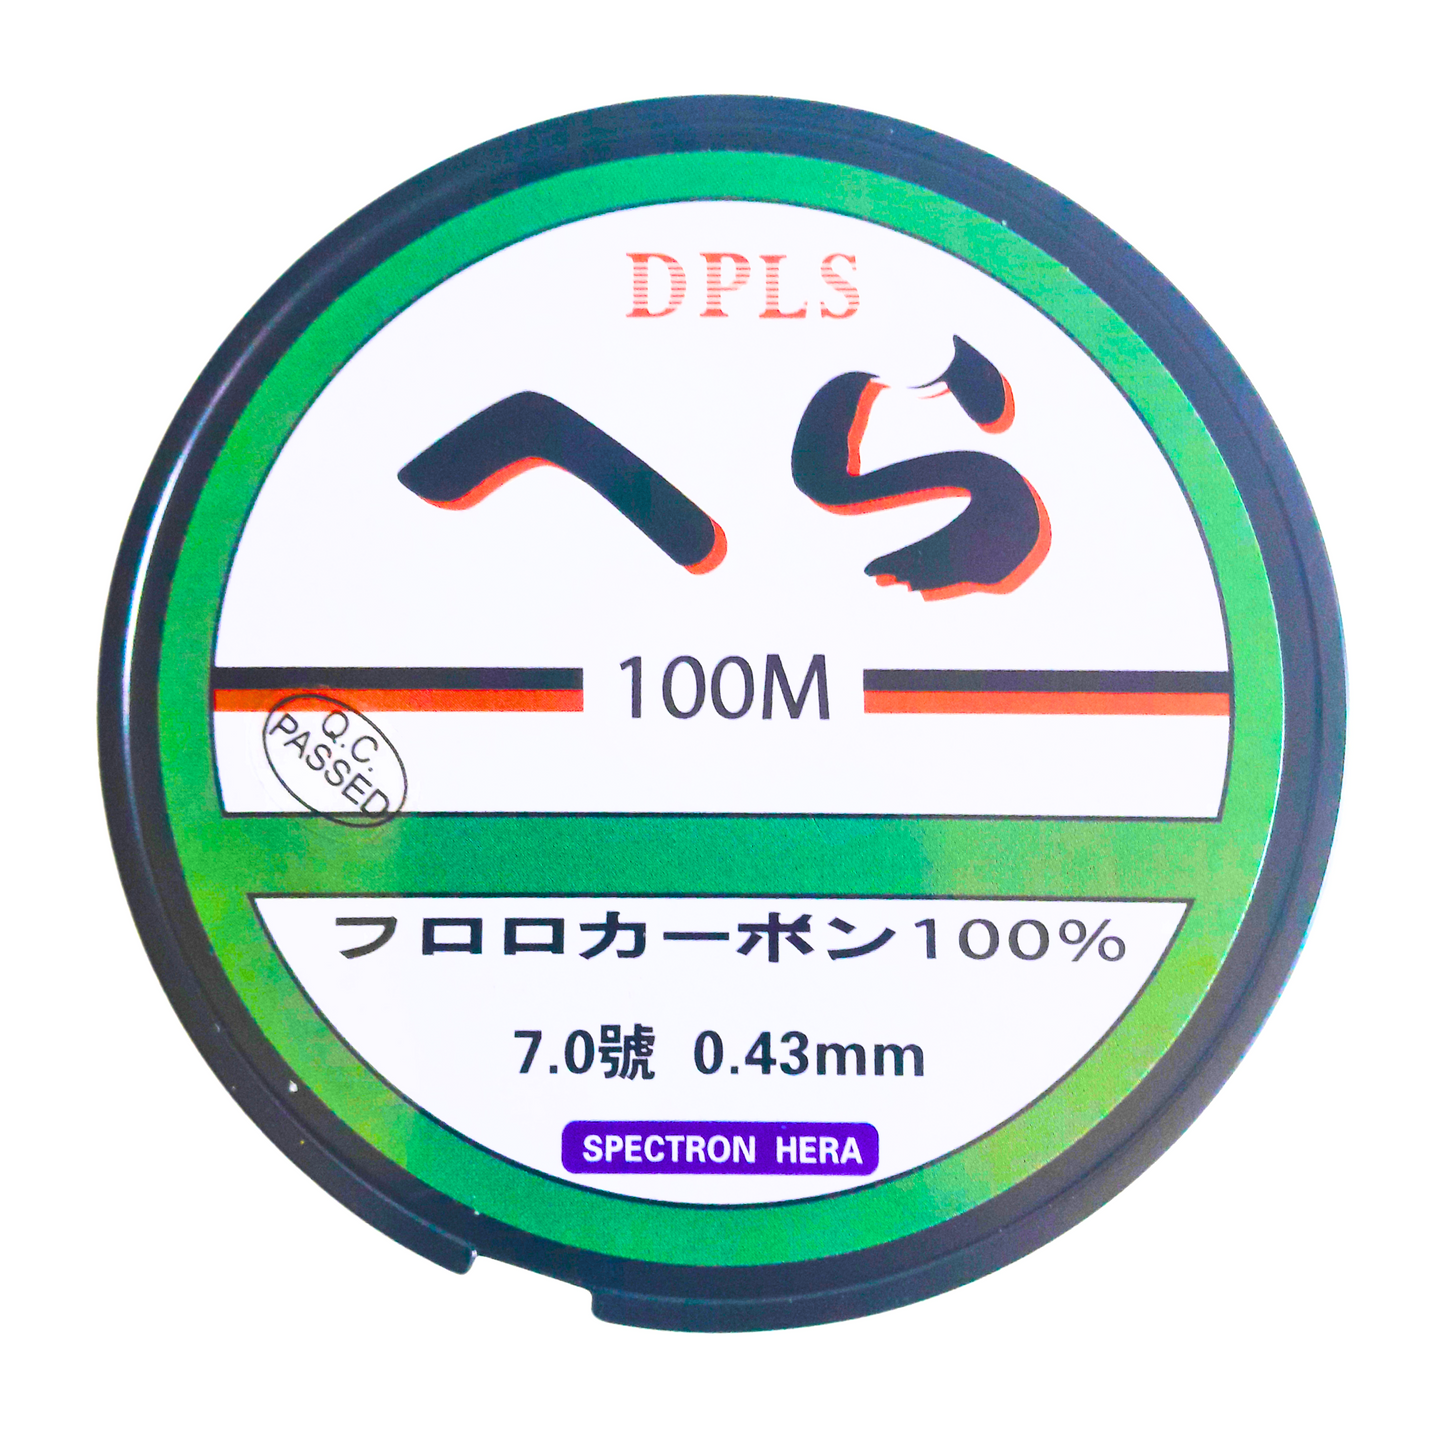 Prunanm Monofilament Fishing Line - 100m | 110yd - 0.43mm | #7